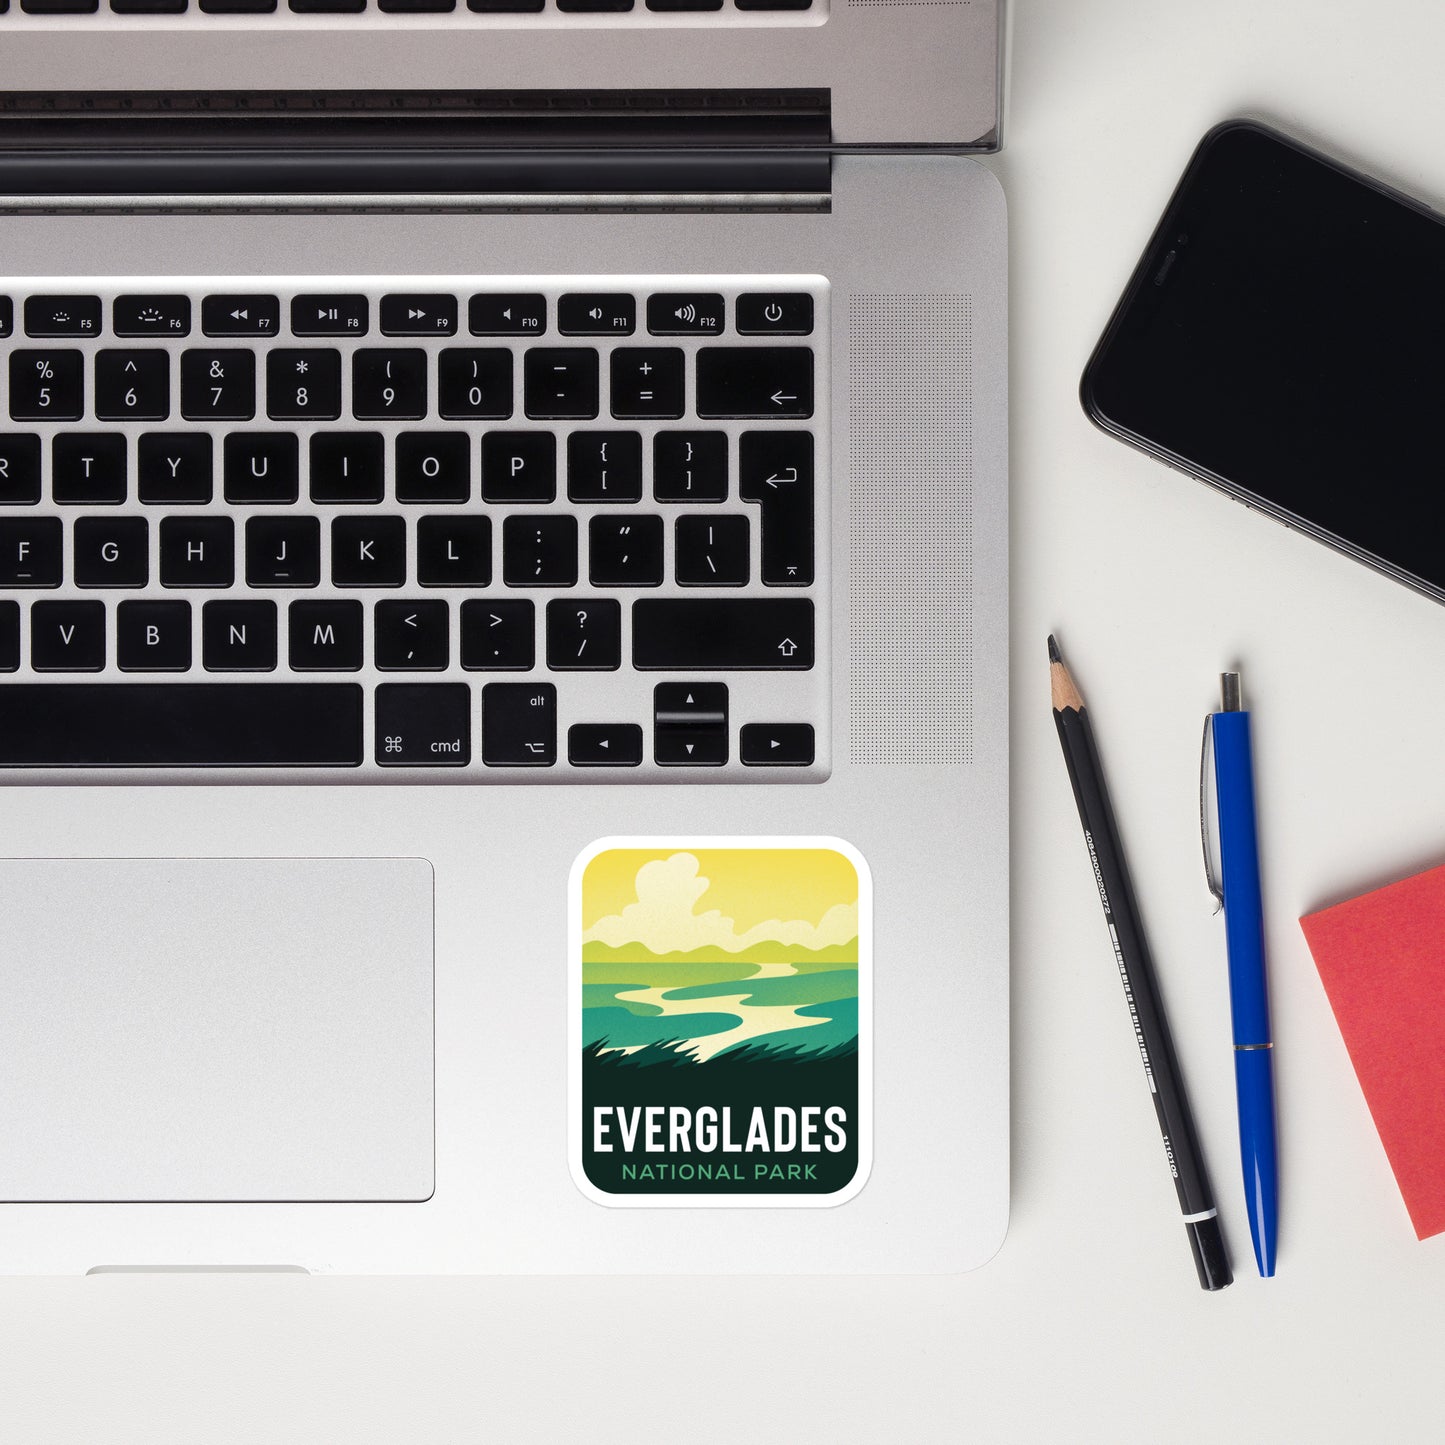 A sticker of Everglades National Park on a laptop